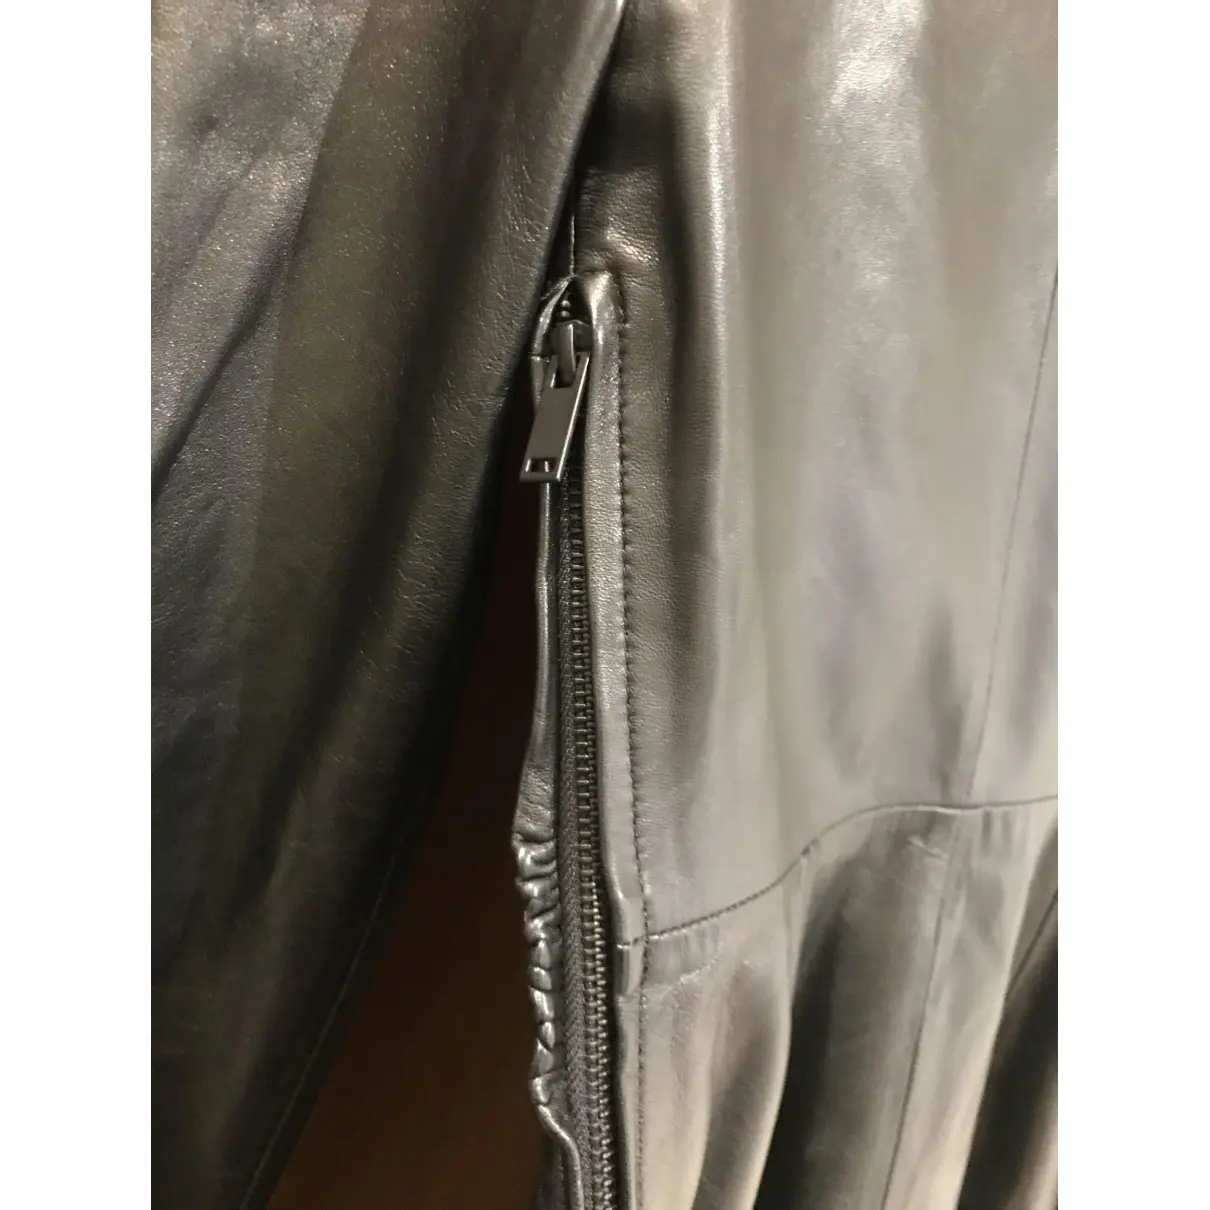 Leather mini dress Zara